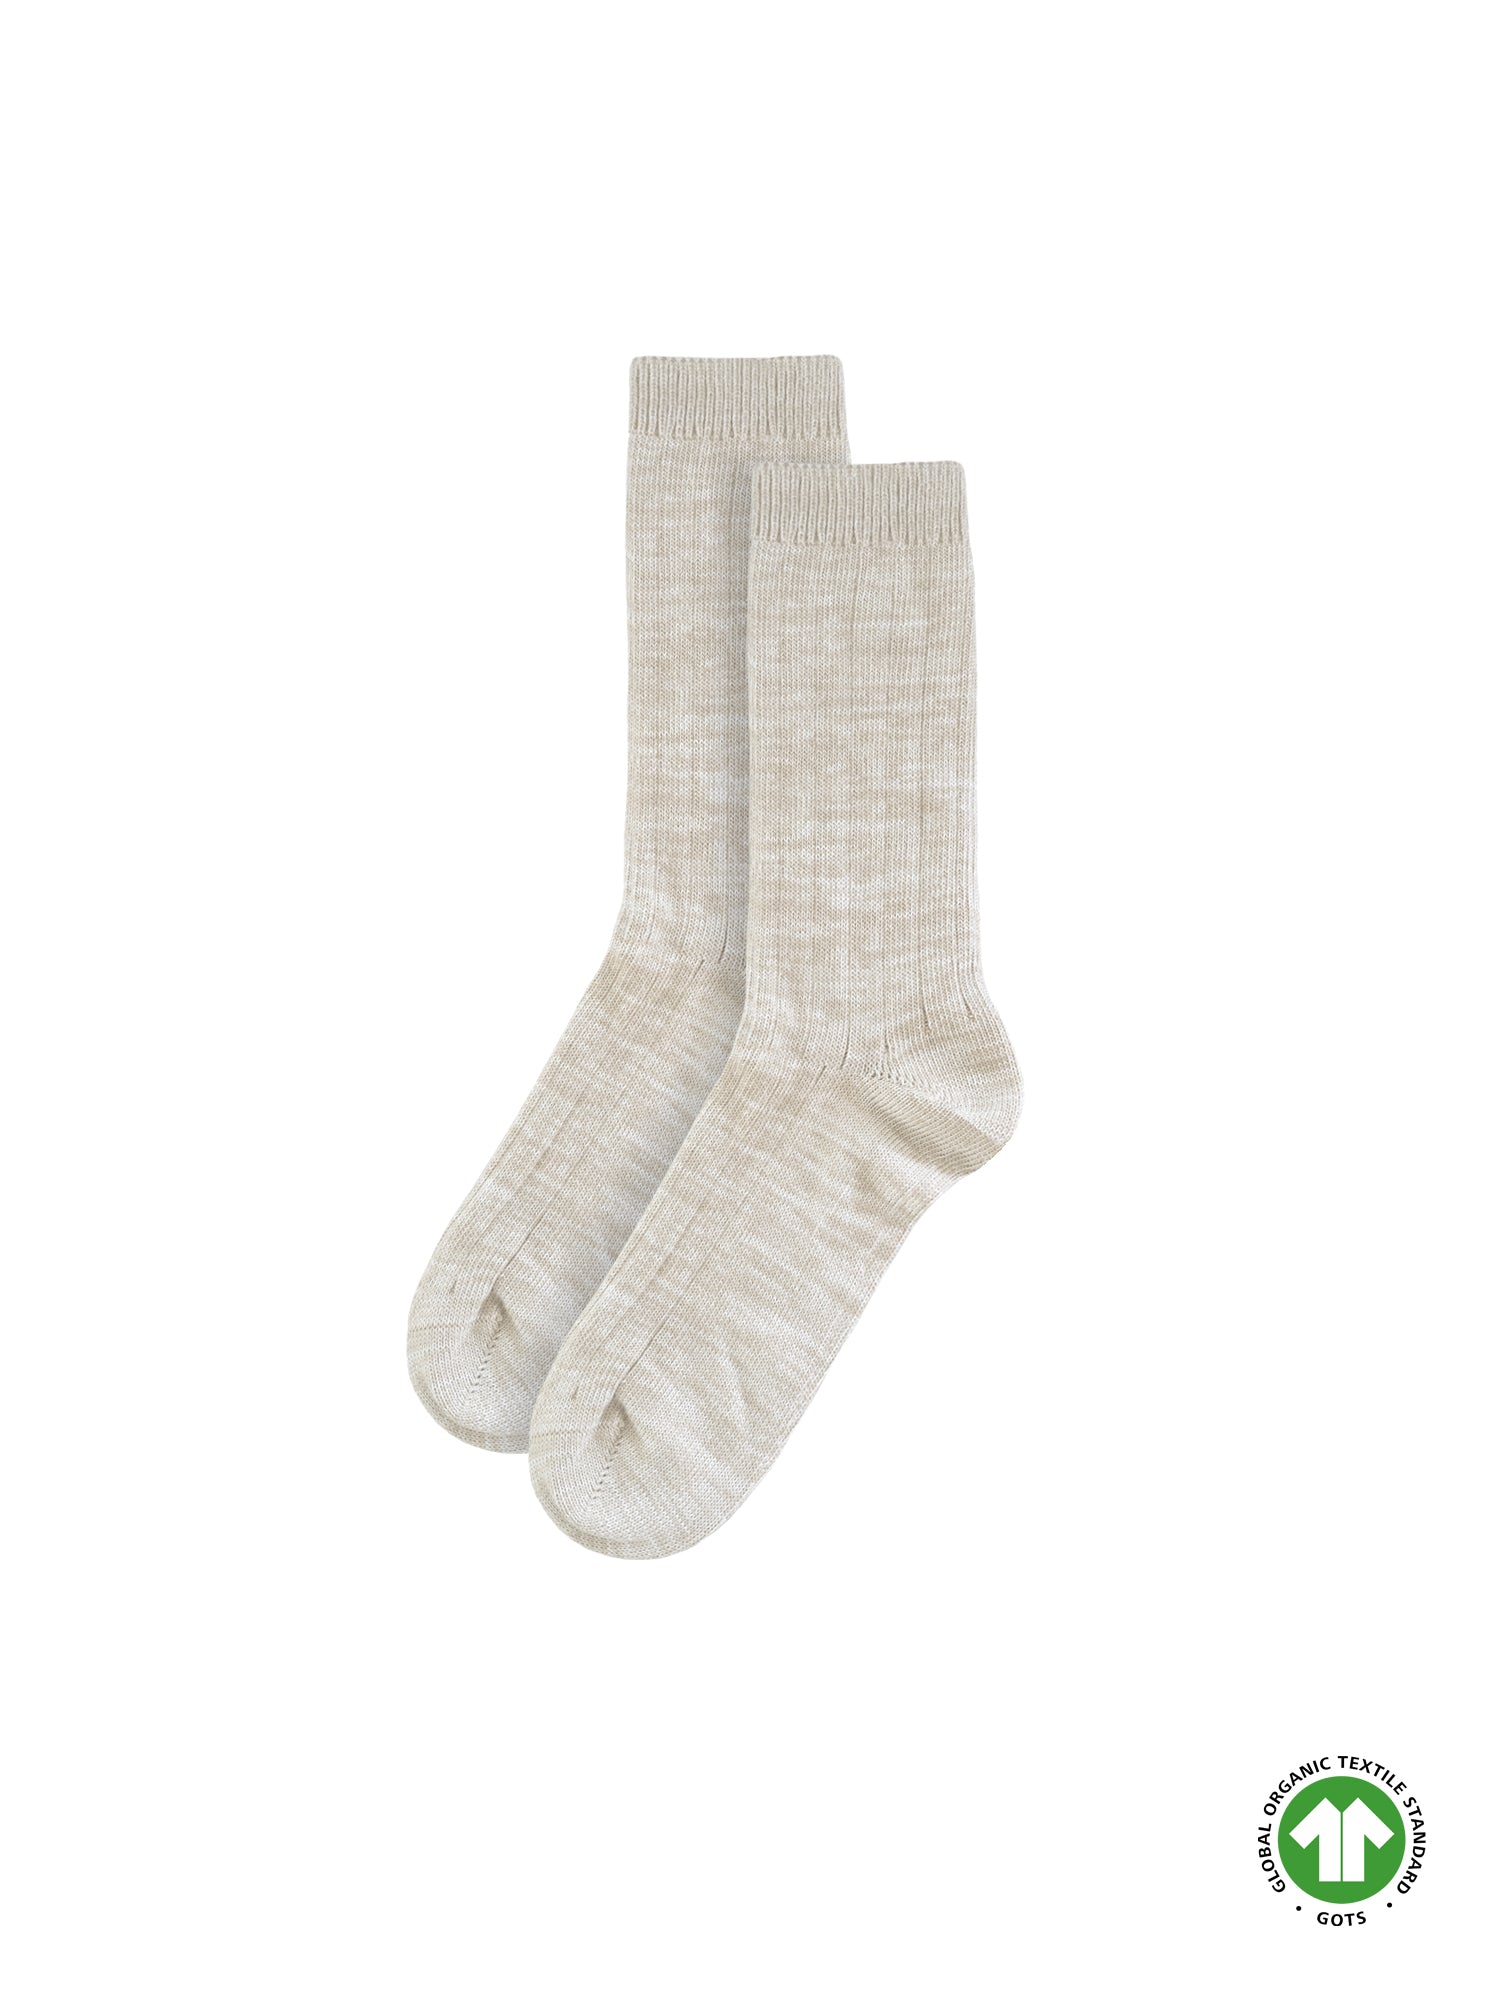 Fair Fashion FUXBAU Socken in beige meliert aus GOTS zertifizierter Biobaumwolle. Made in Portugal